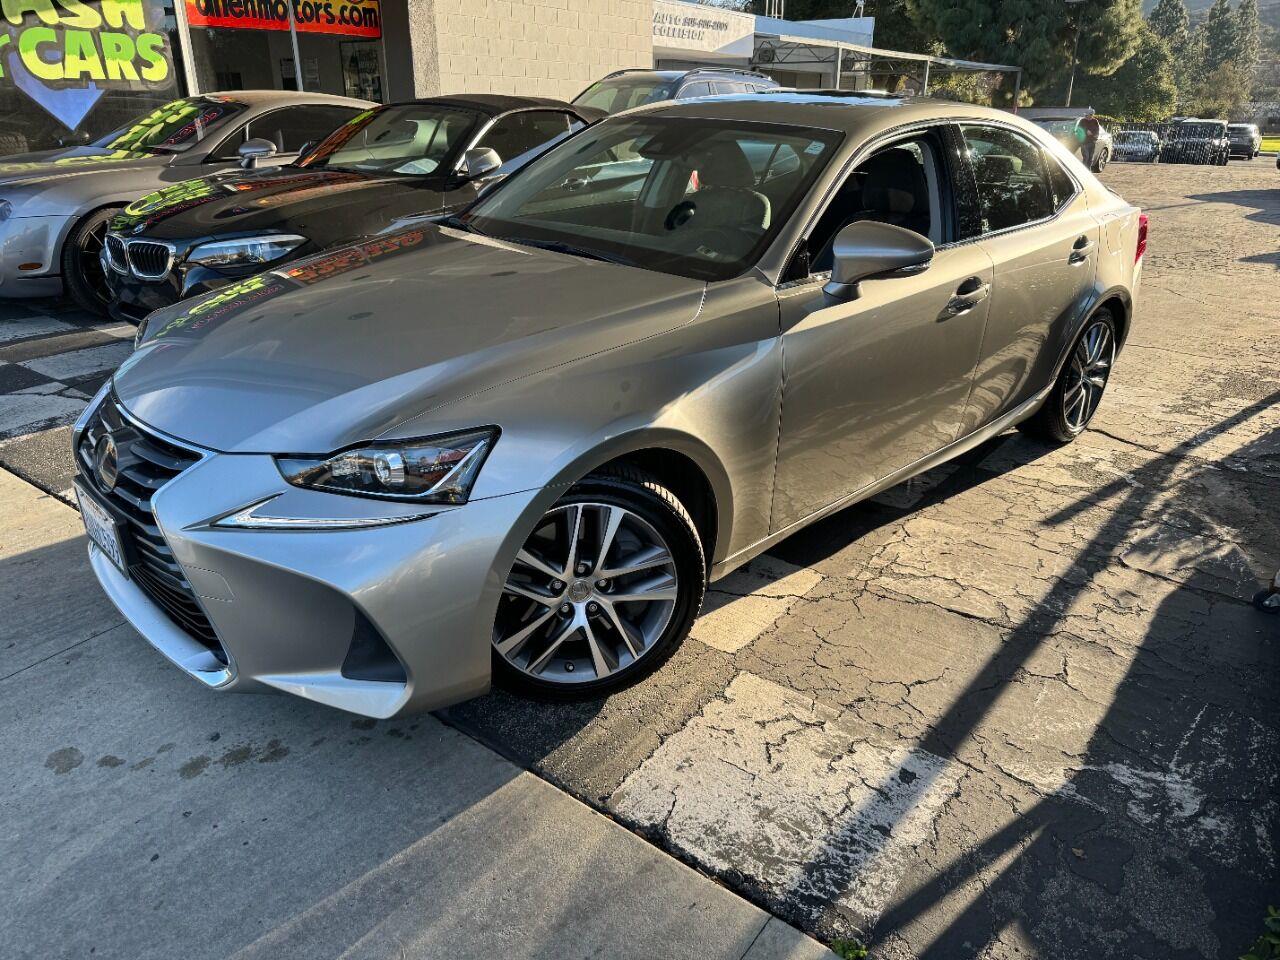 For Sale: 2019 Lexus IS in Thousand Oaks, California for sale in Thousand Oaks, CA